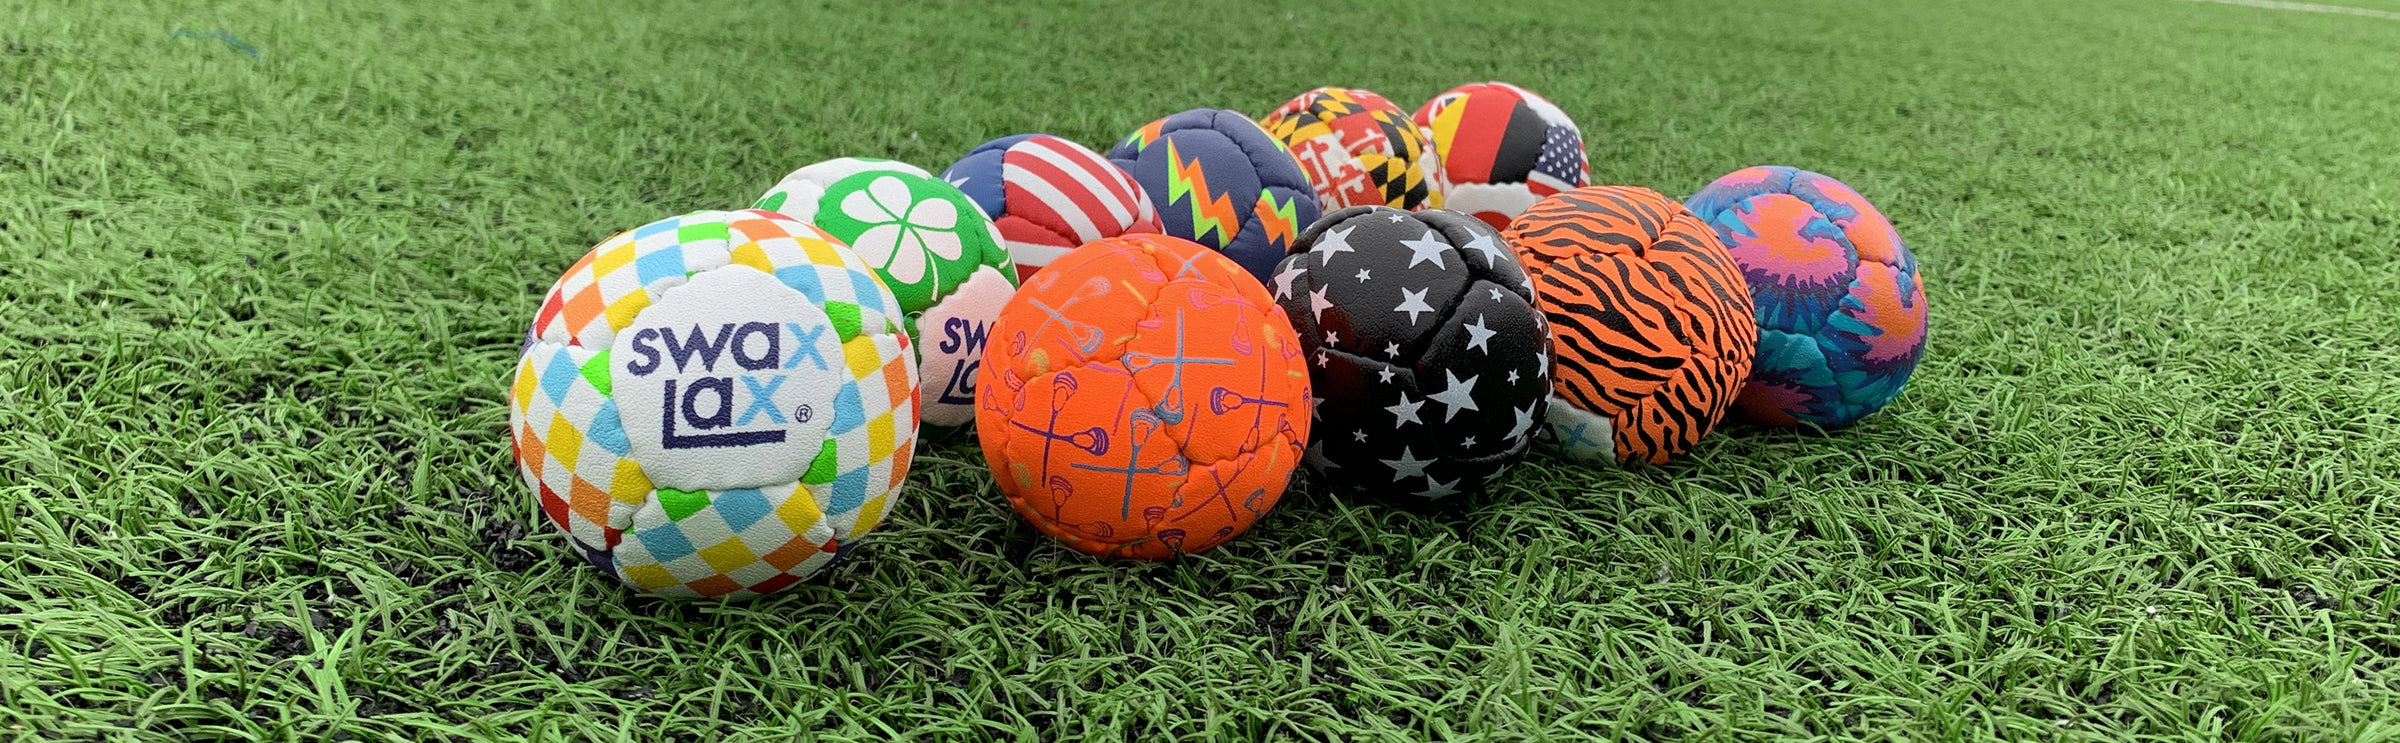 Swax Lax Lacrosse Training Balls - Original Pattern Designs